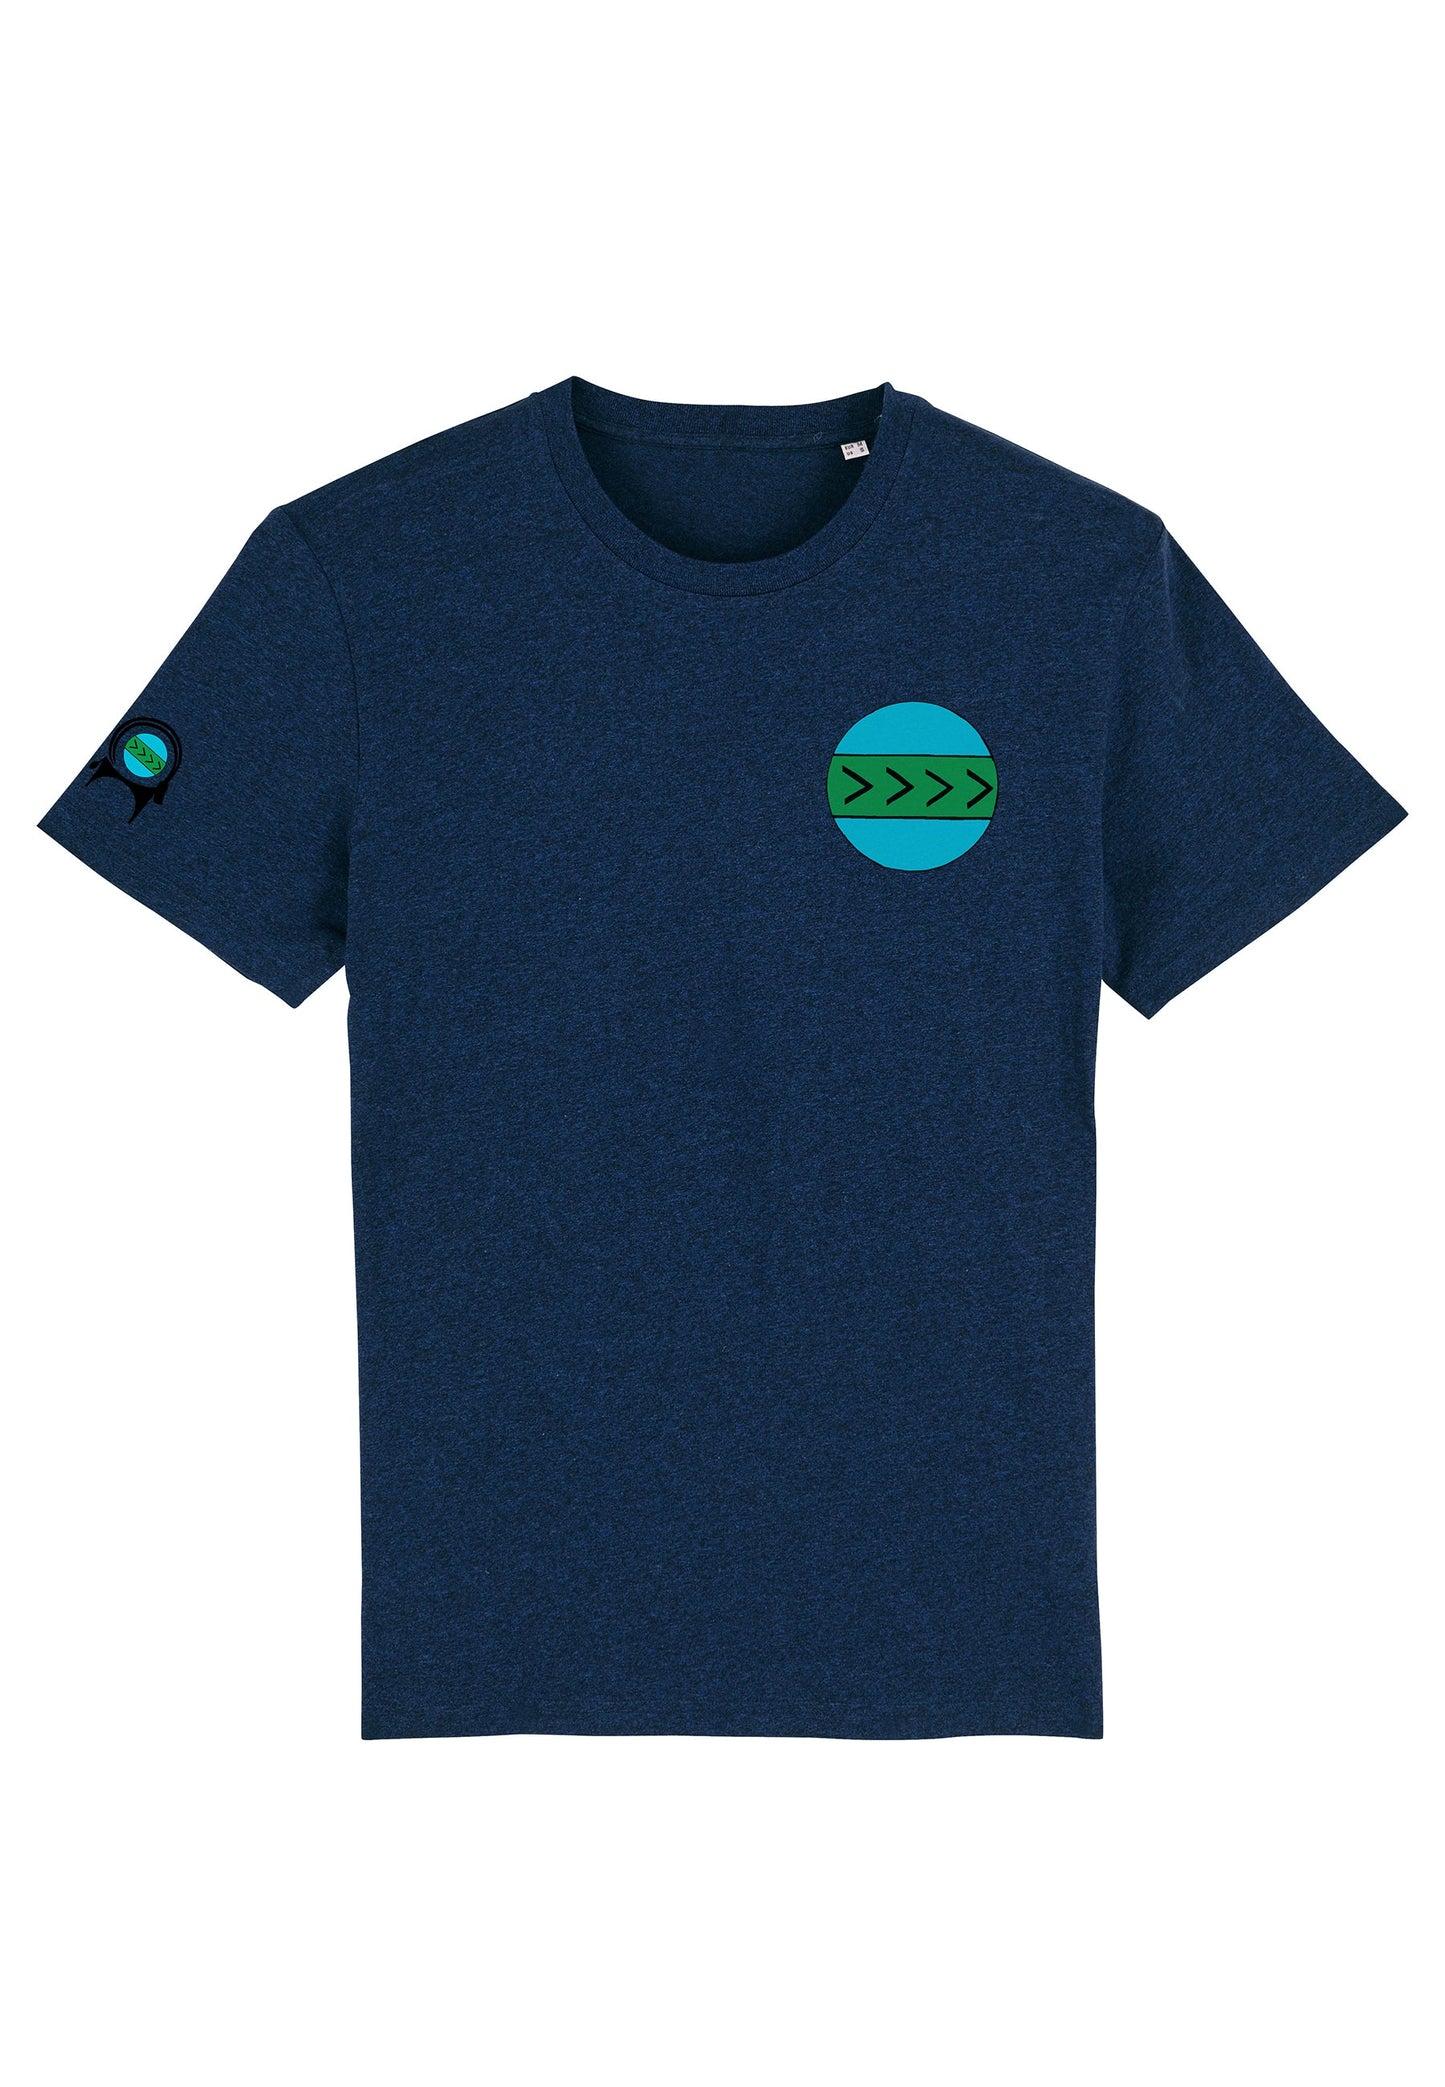 CAPRA-EARTH Unisex T-shirt , Vegan T-shirt in Black Heather Blue Cotton Jersey